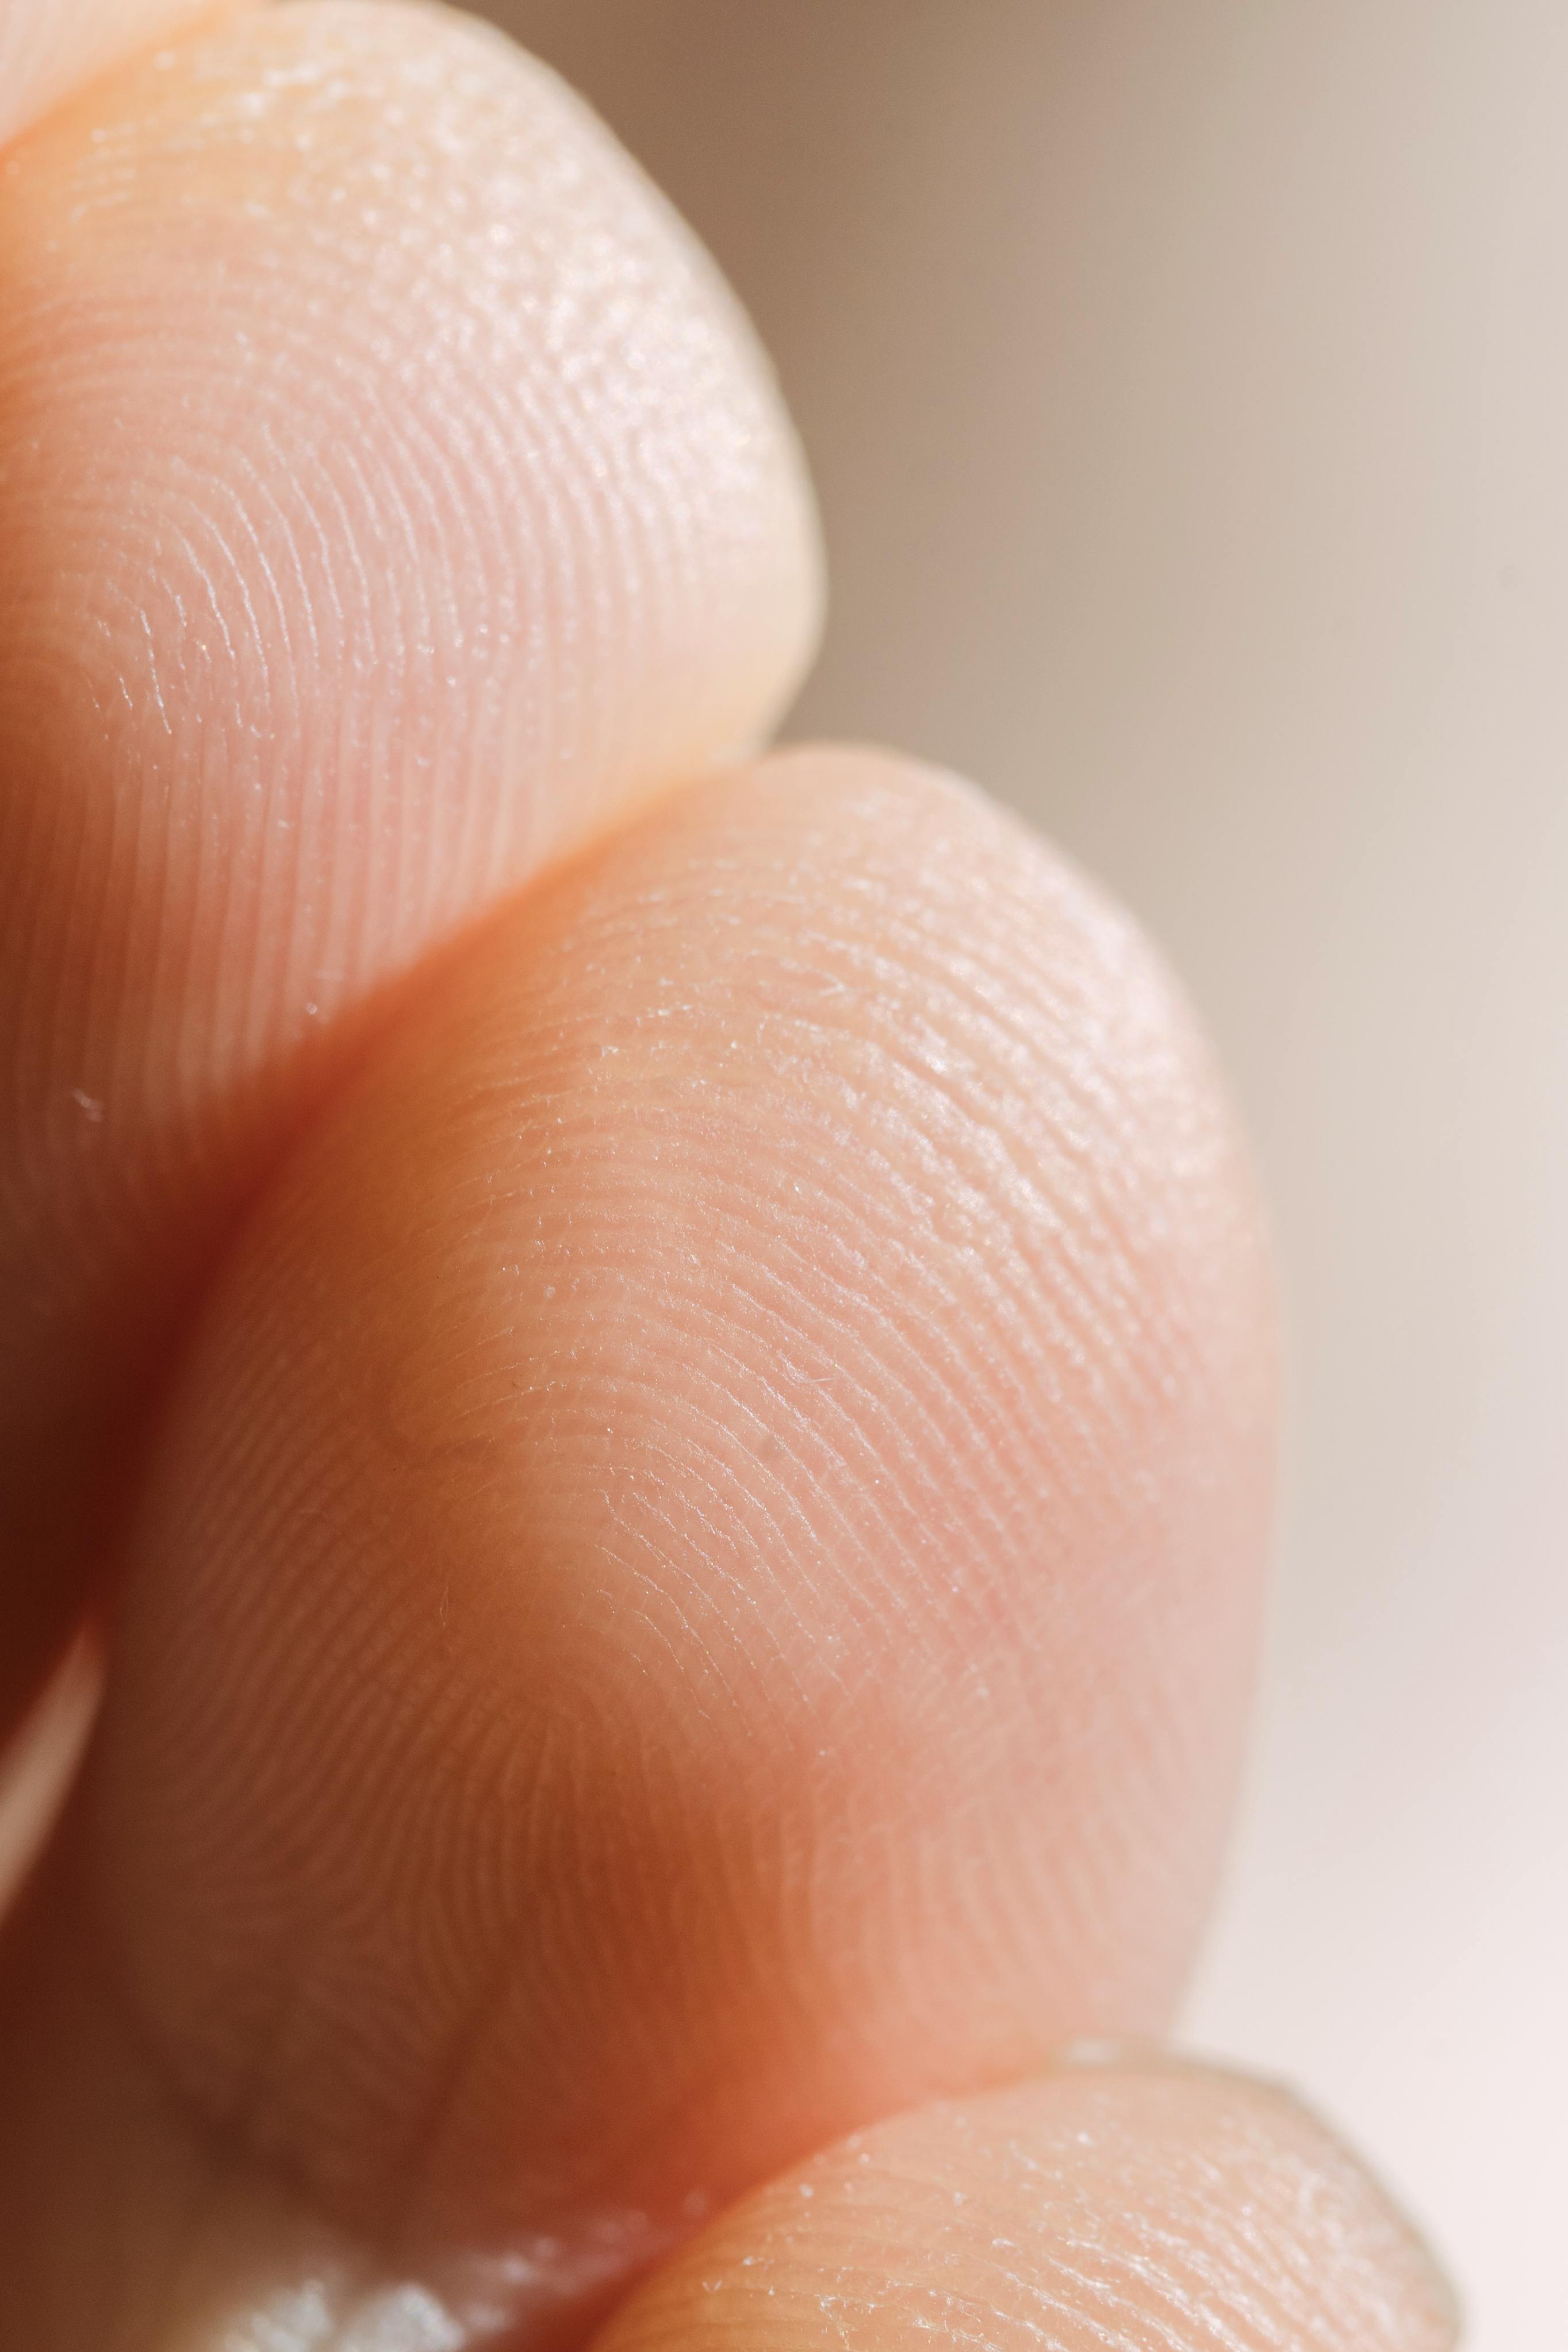 finger tips of faceless person